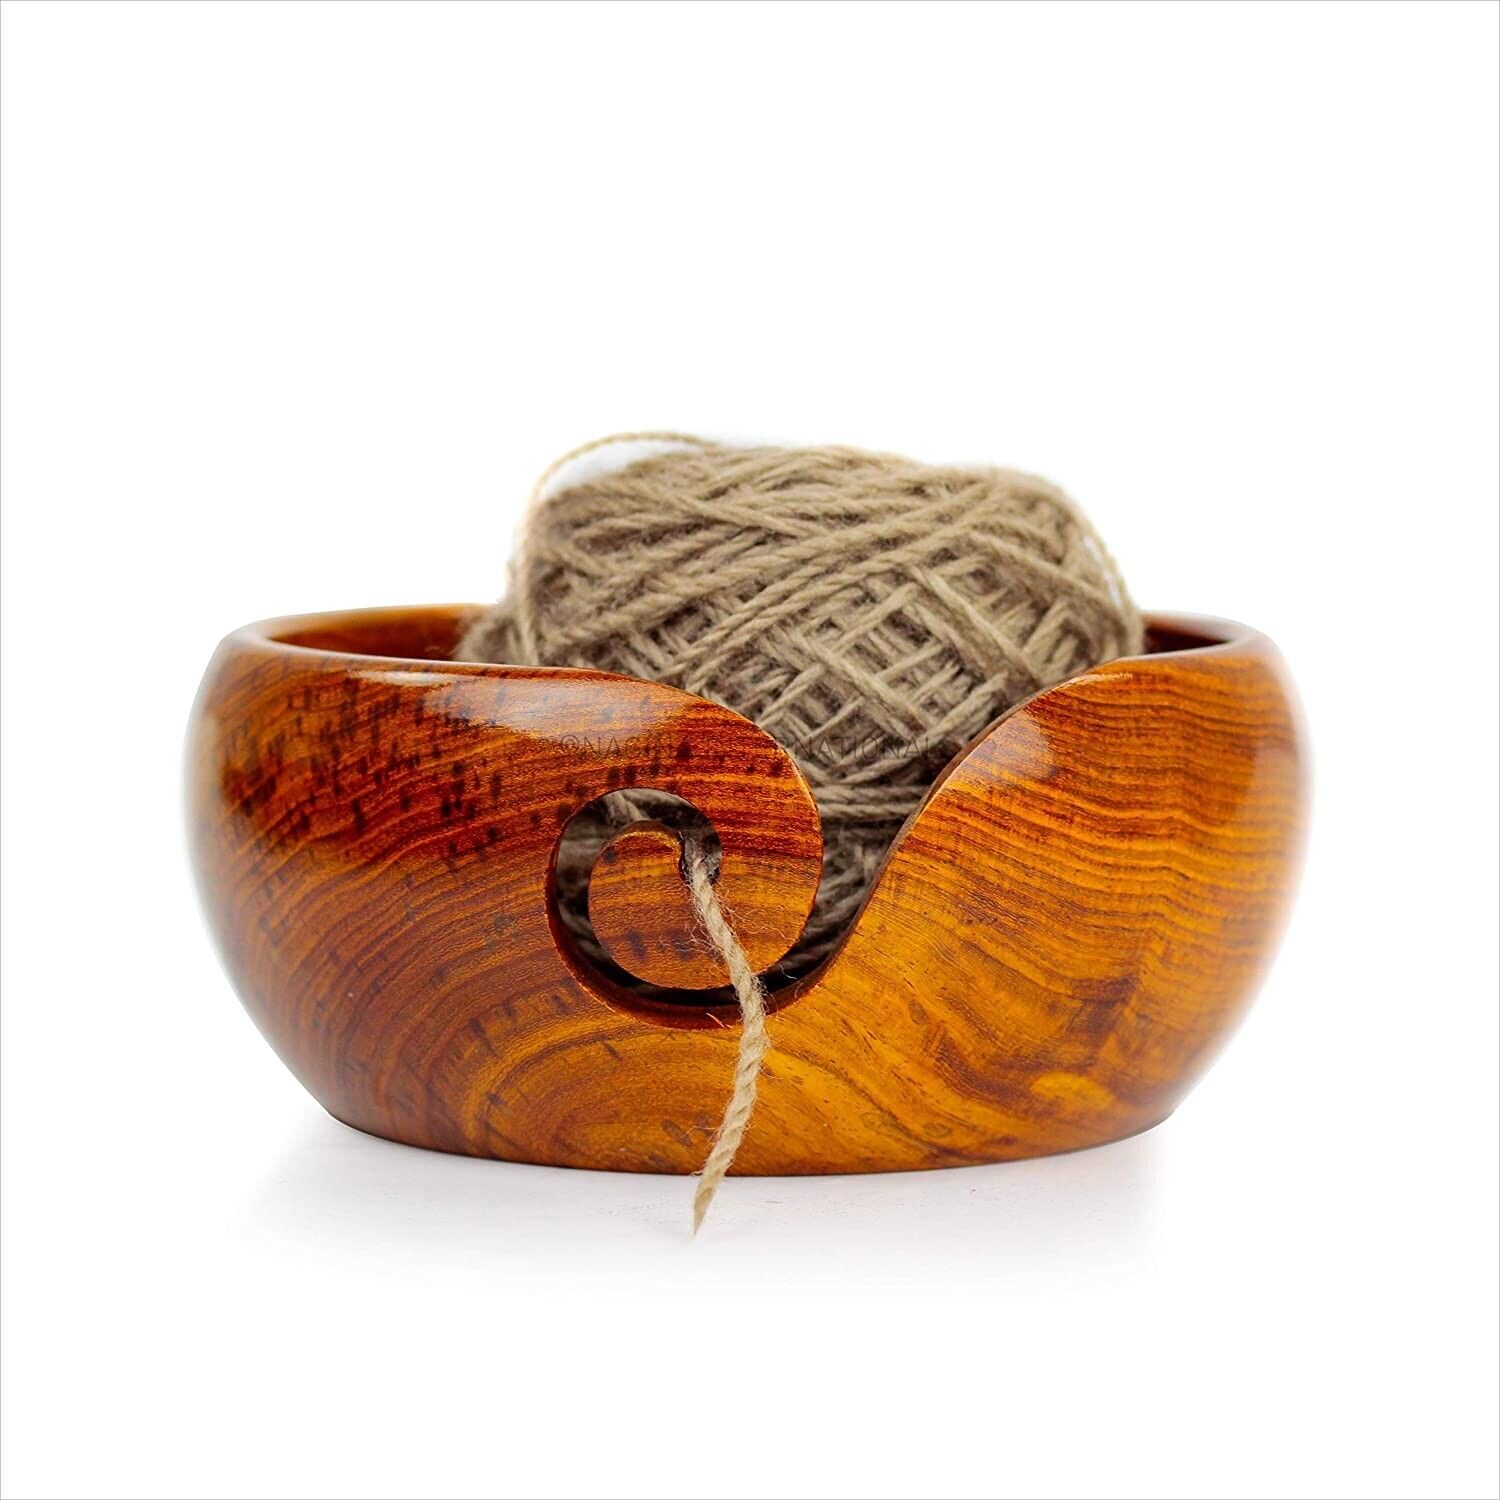 Handmade Wooden Yarn Bowl, Knitting Yarn Holder and Organizer - Perfect for Moth